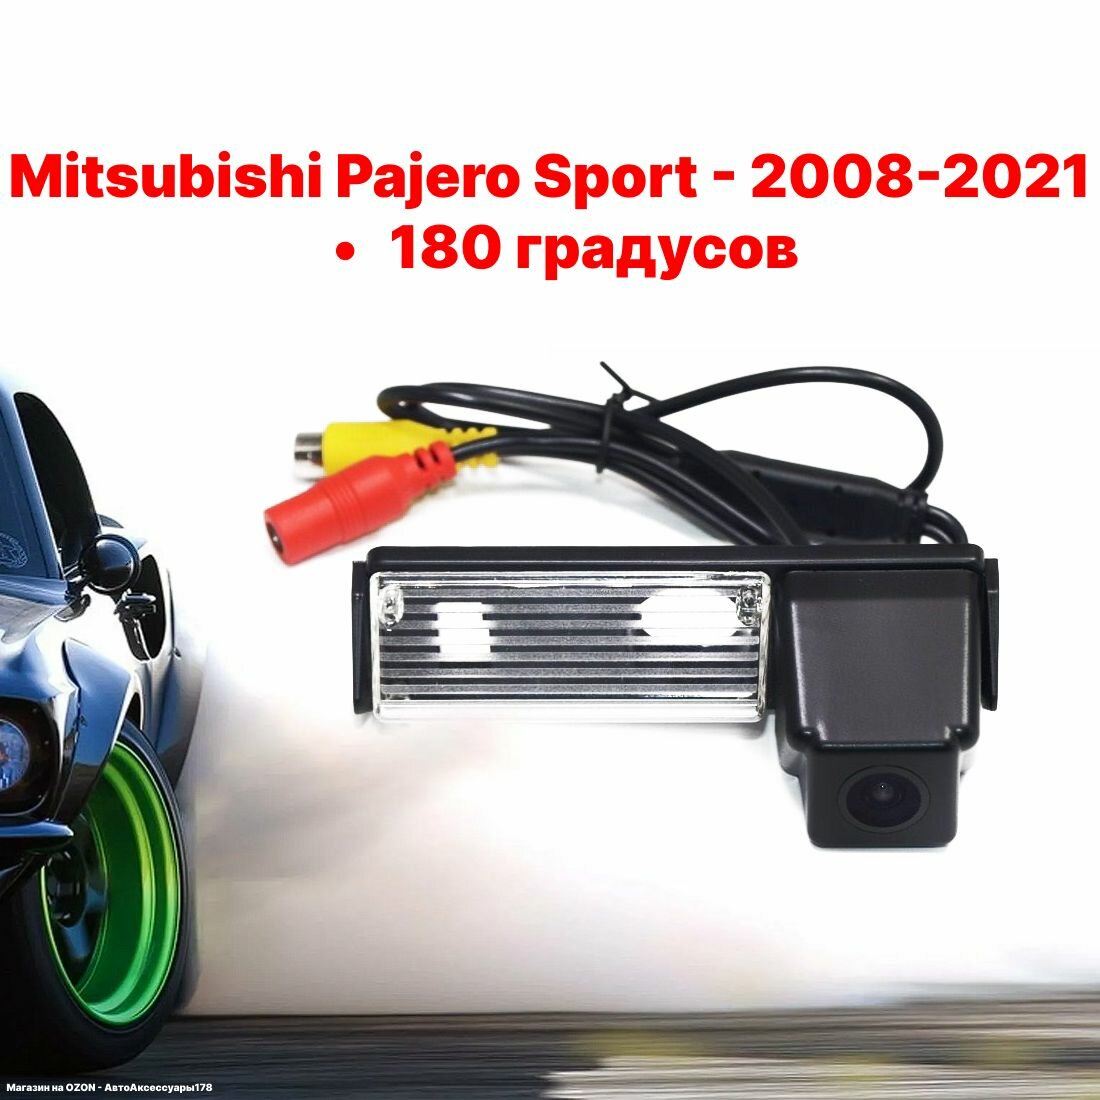 Камера заднего вида Мицубиси Паджеро Спорт - 180 градусов (Mitsubishi Pajero Sport - 2008-2021)